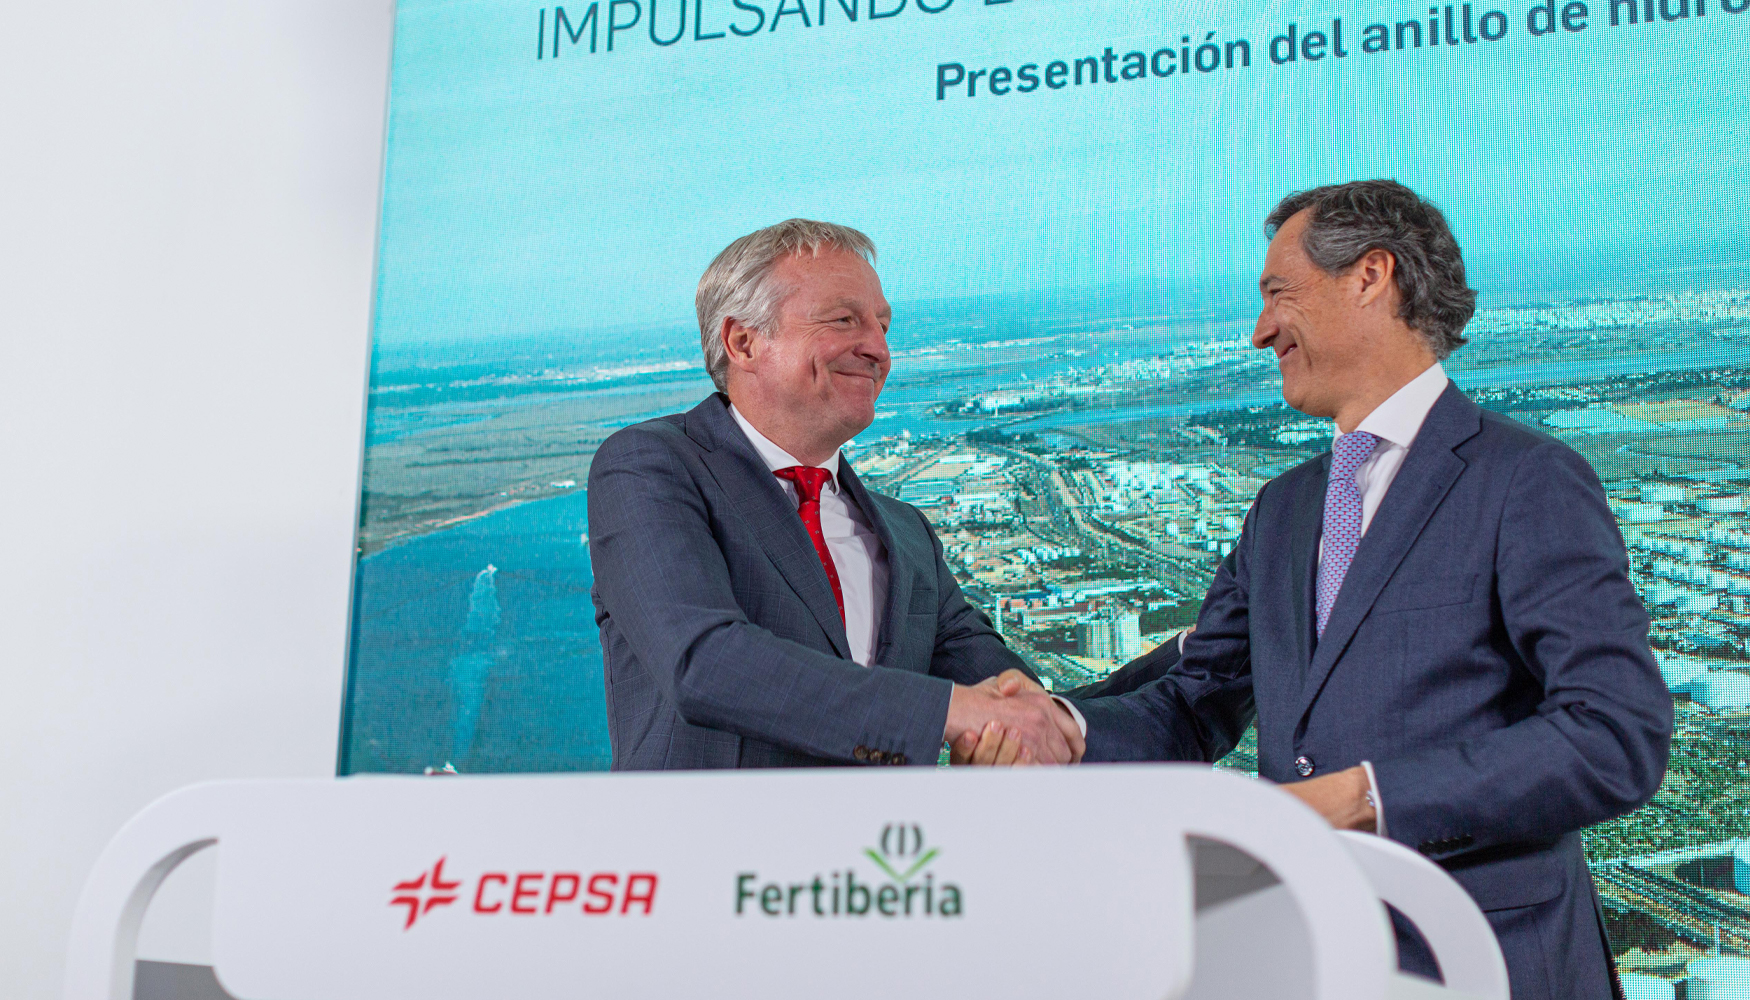 De izquierda a derecha: Maarten Wetselaar, director ejecutivo de Cepsa y Javier Goi, director ejecutivo del Grupo Fertiberia...